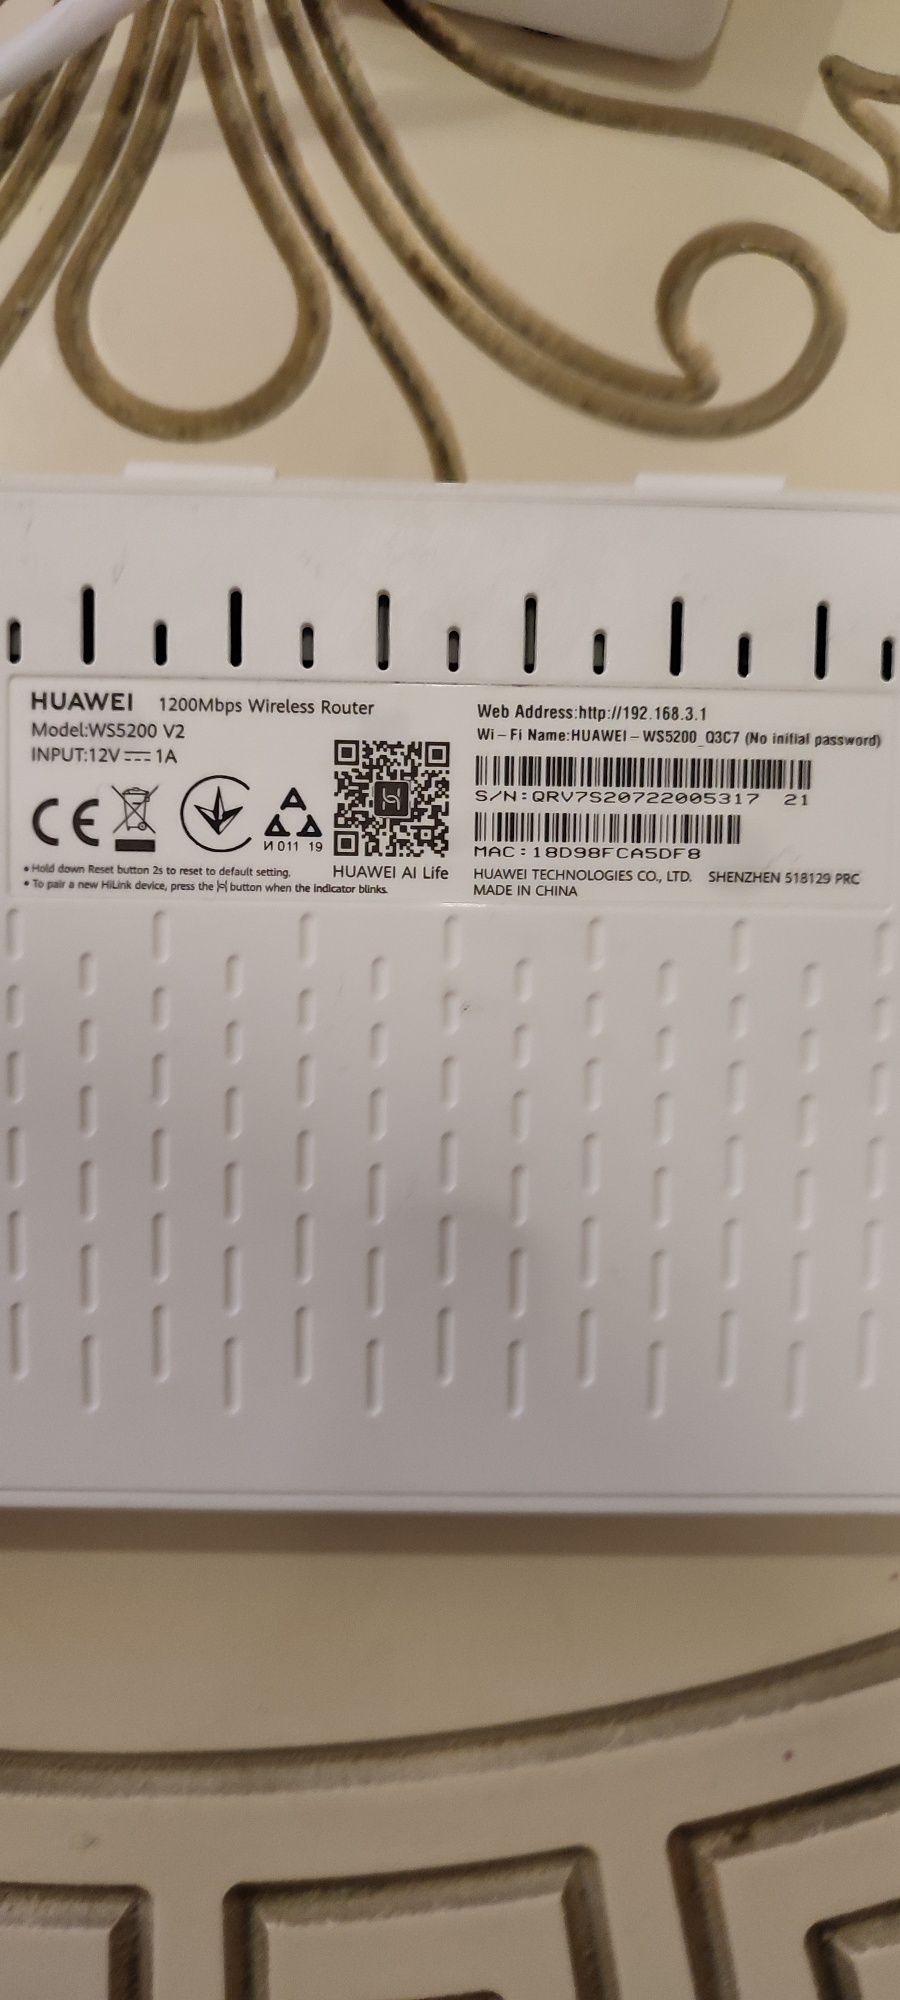 Huawei WS5200 v2